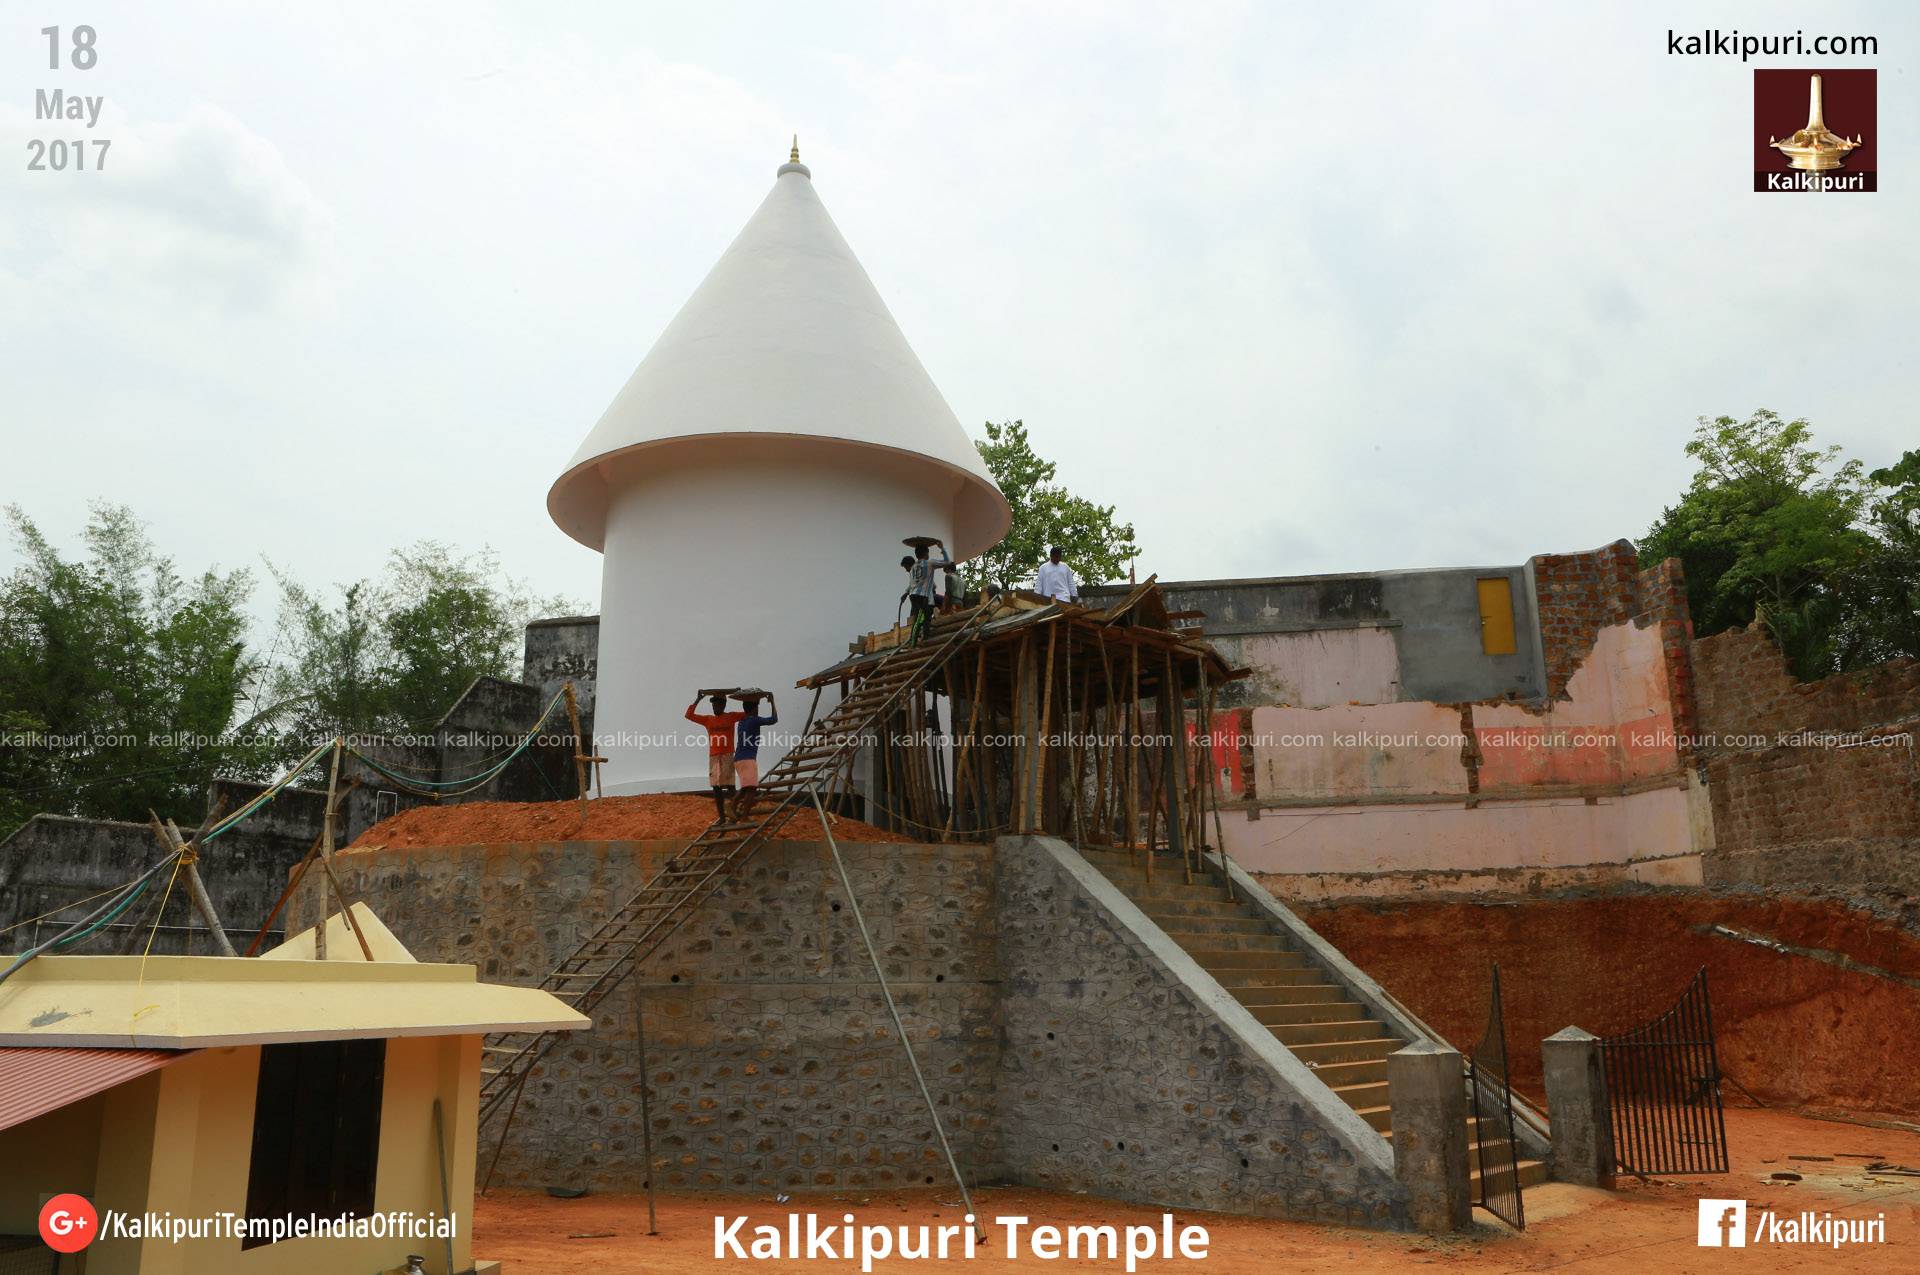 Kalkipuri Temple on 18 May 2017-1